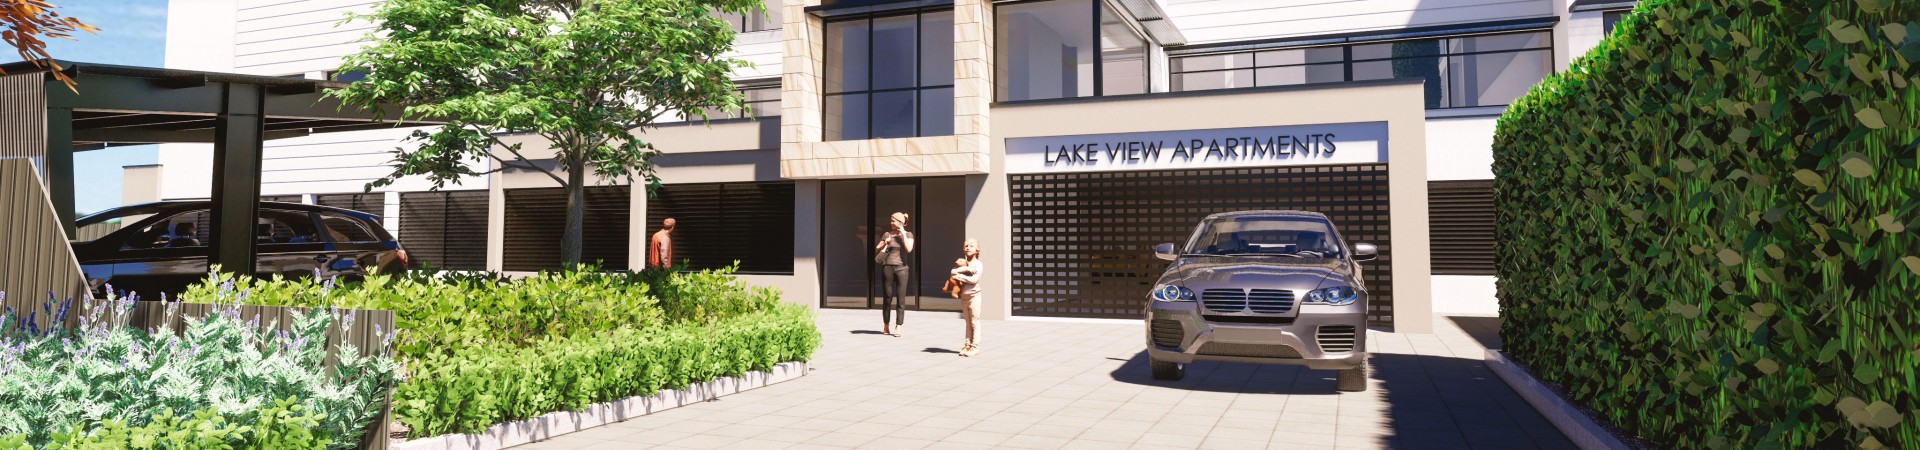 Lakevew Apartments WEST LAKES CORNER Edit westlakesviews rear web edit